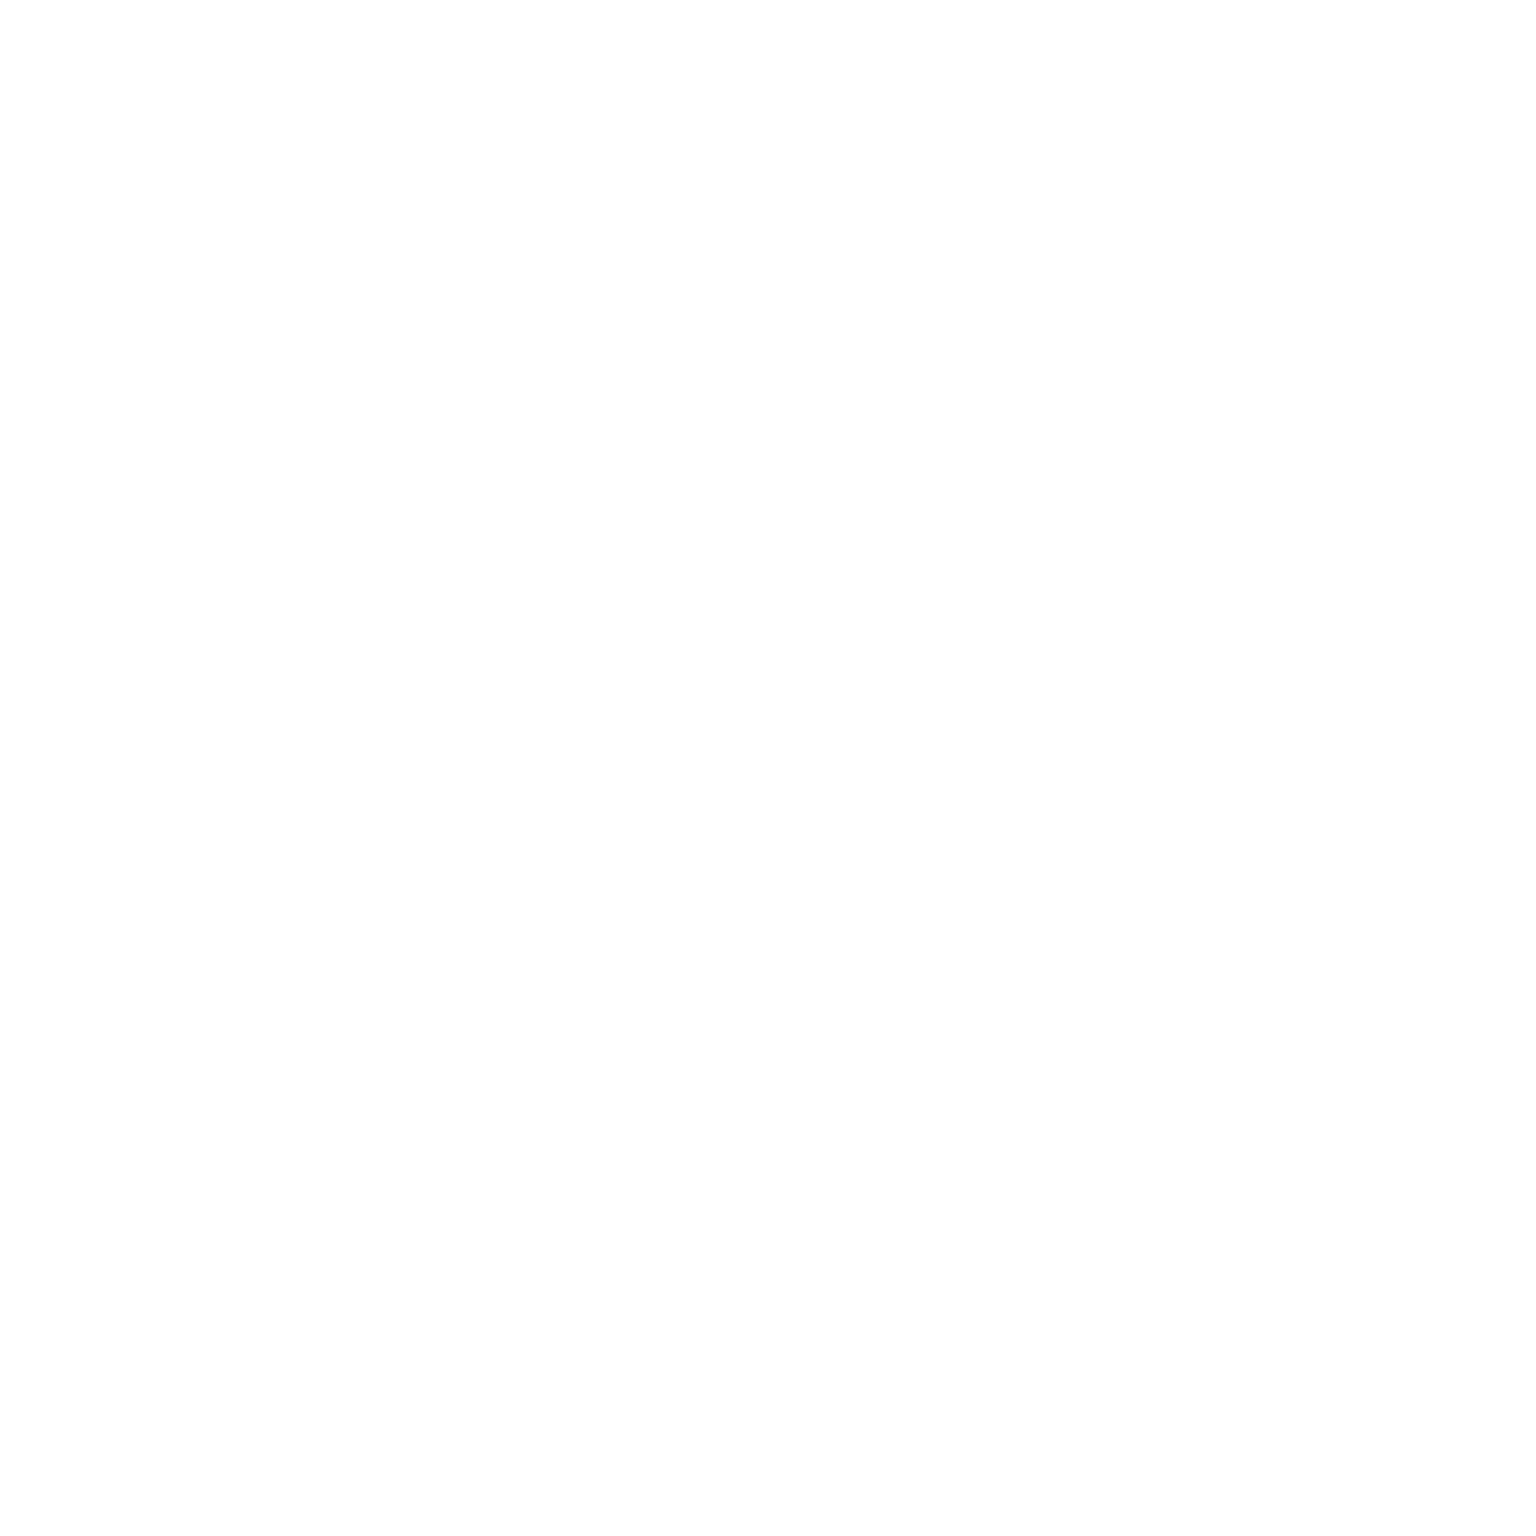 Bank of Beijing logo pour fonds sombres (PNG transparent)